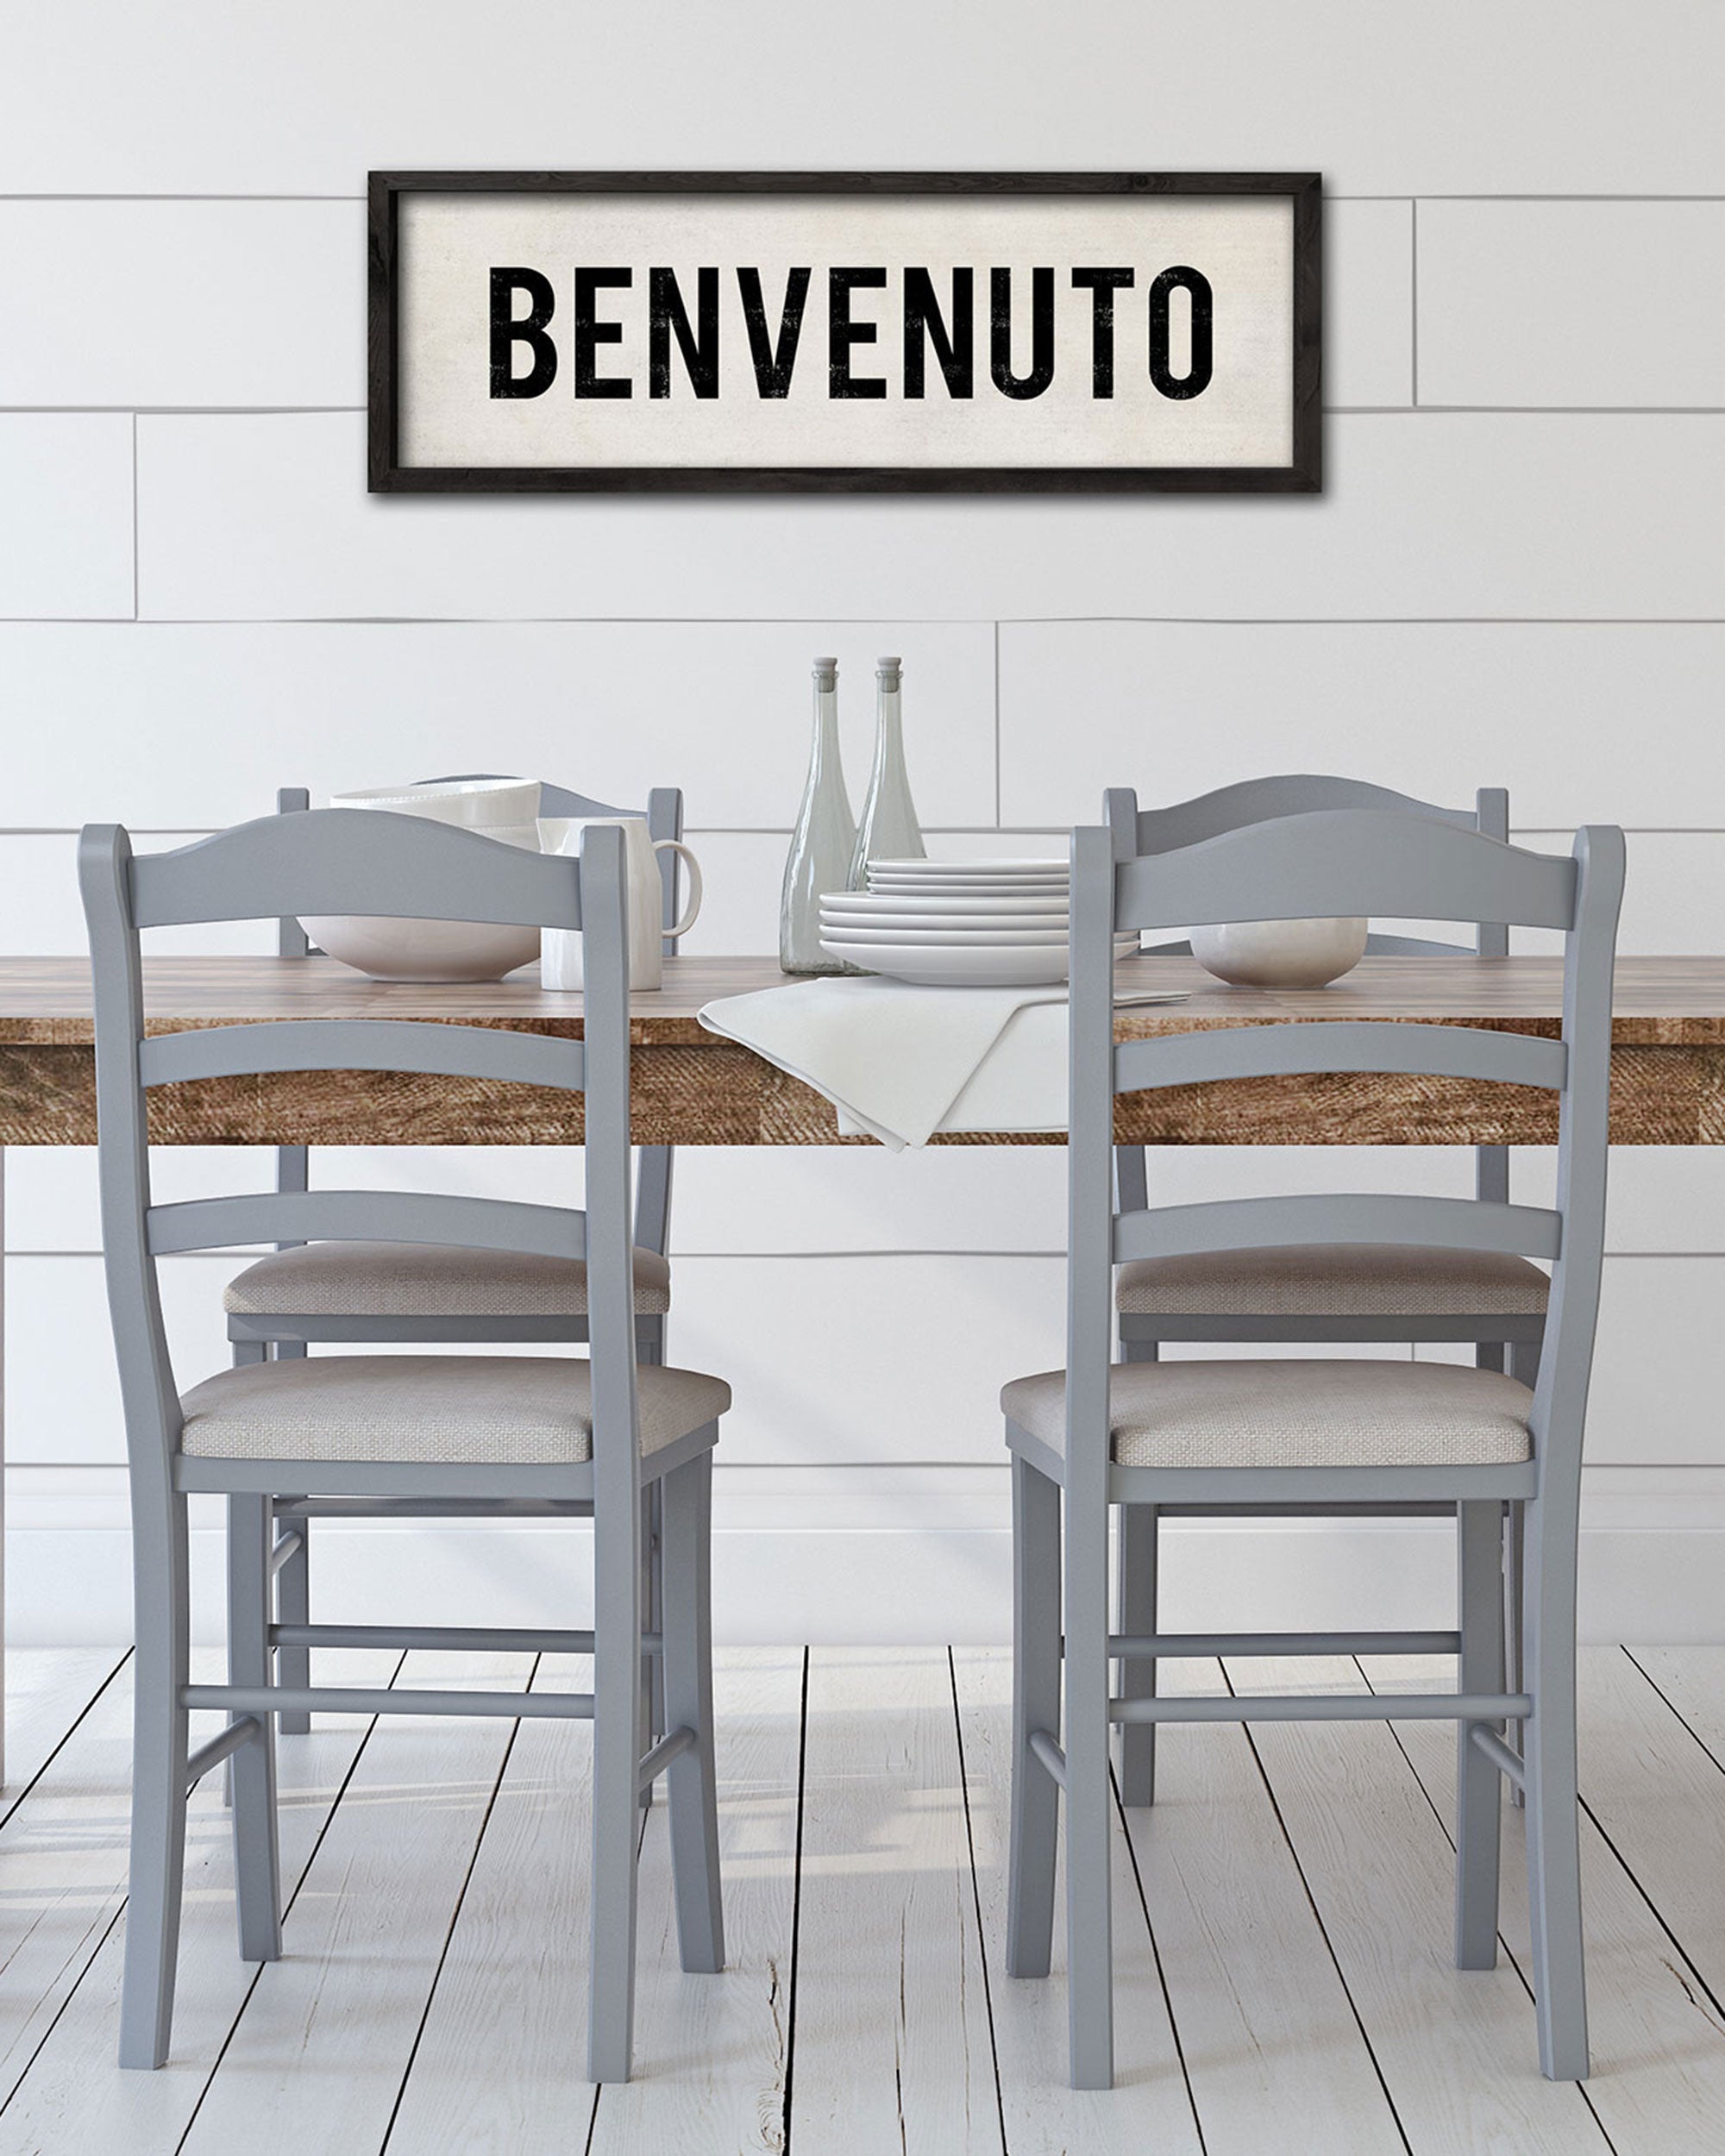 Benvenuto Rustic Italian Welcome Sign | Transit Design